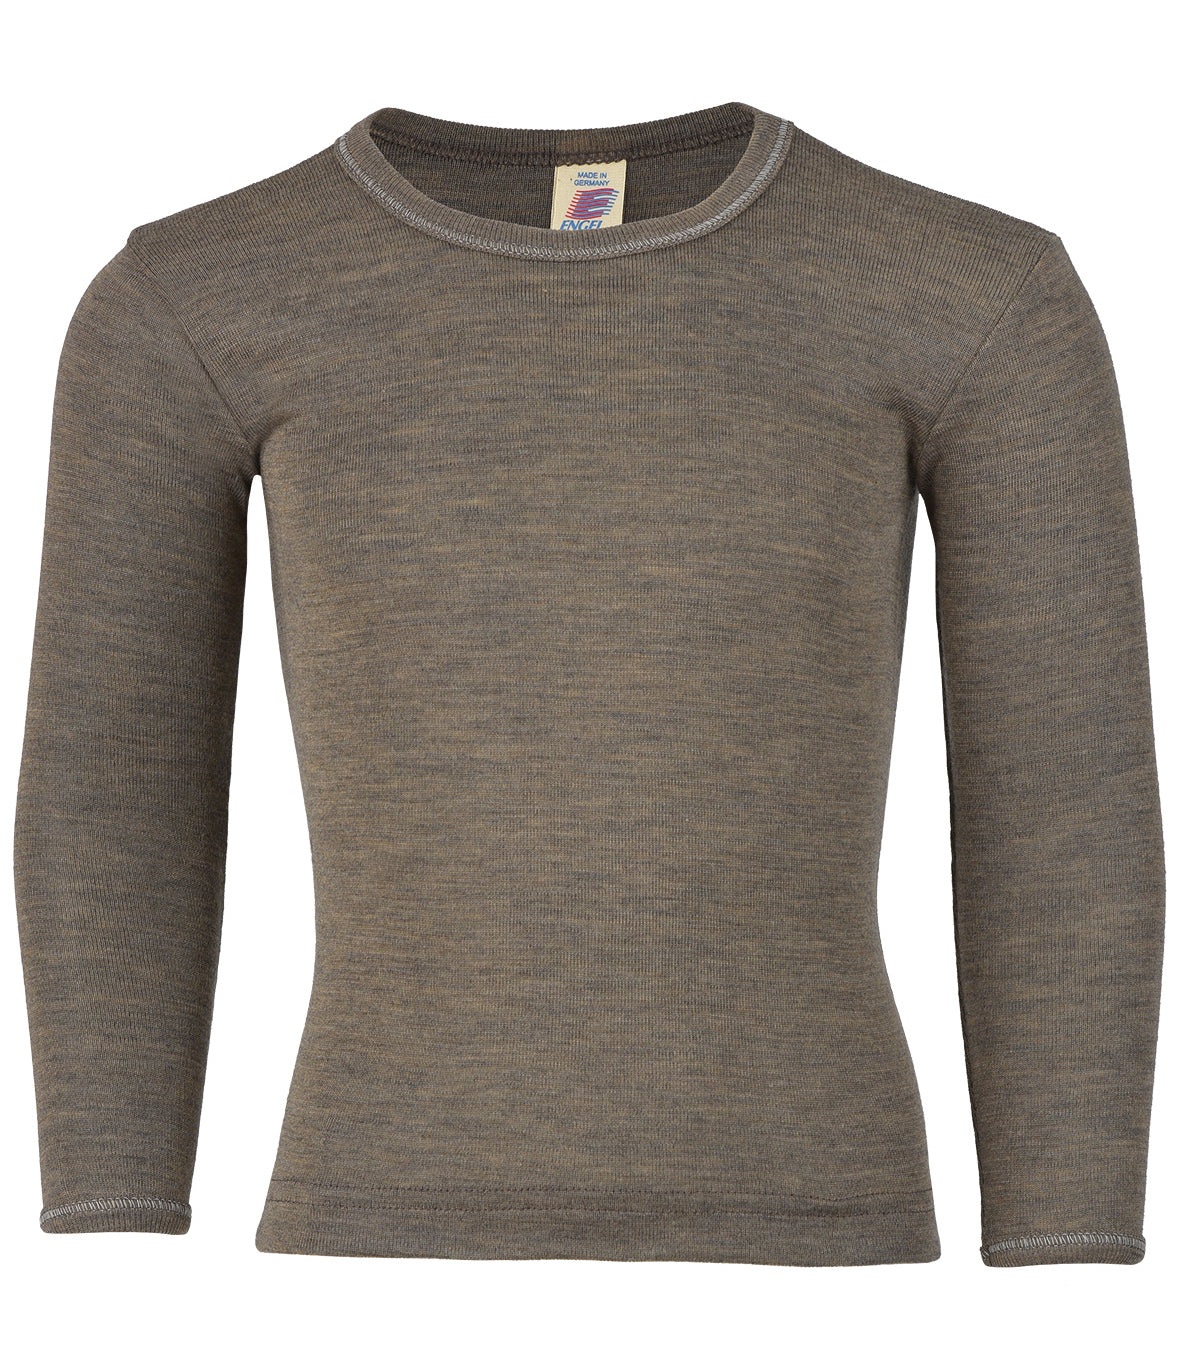 Engel Child Long Sleeve Shirt, Merino Wool/Silk, Solid